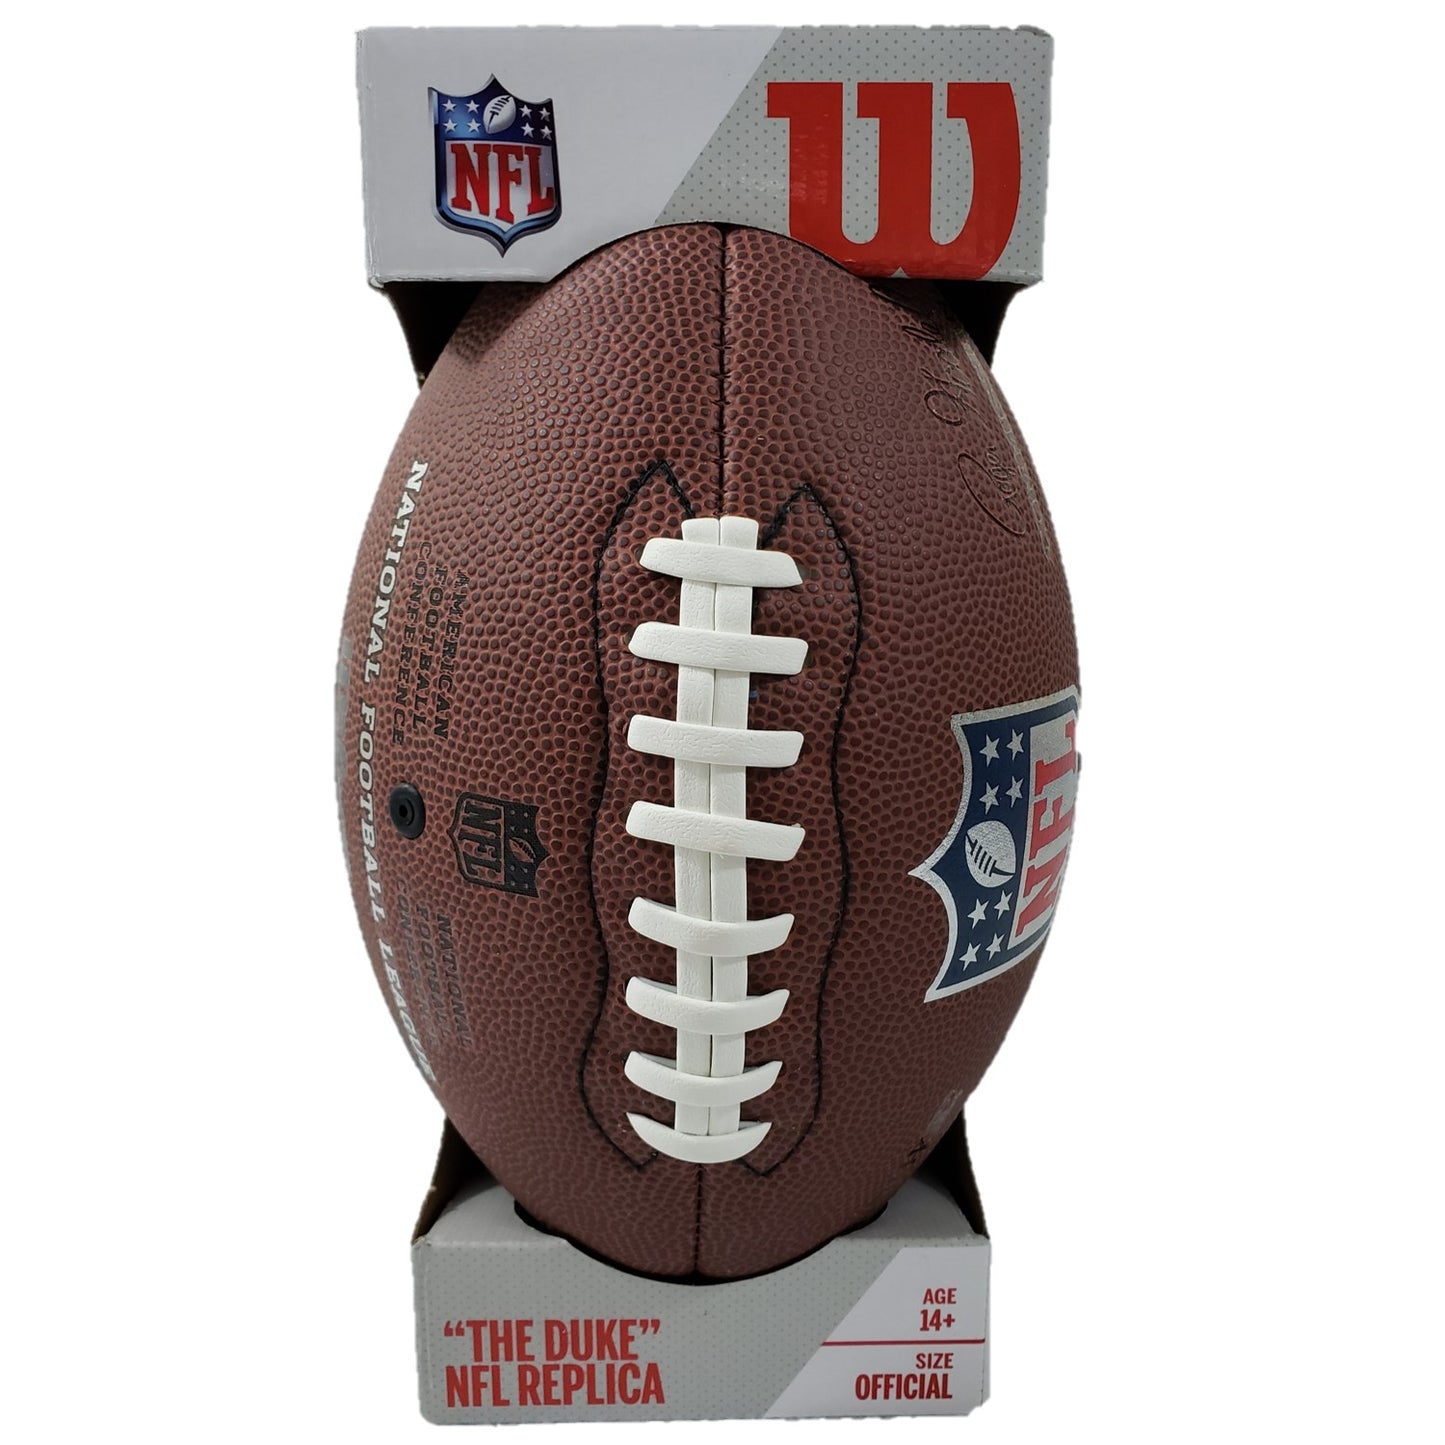 Wilson Football Size Official 14+ "The Duke" NFL Replica